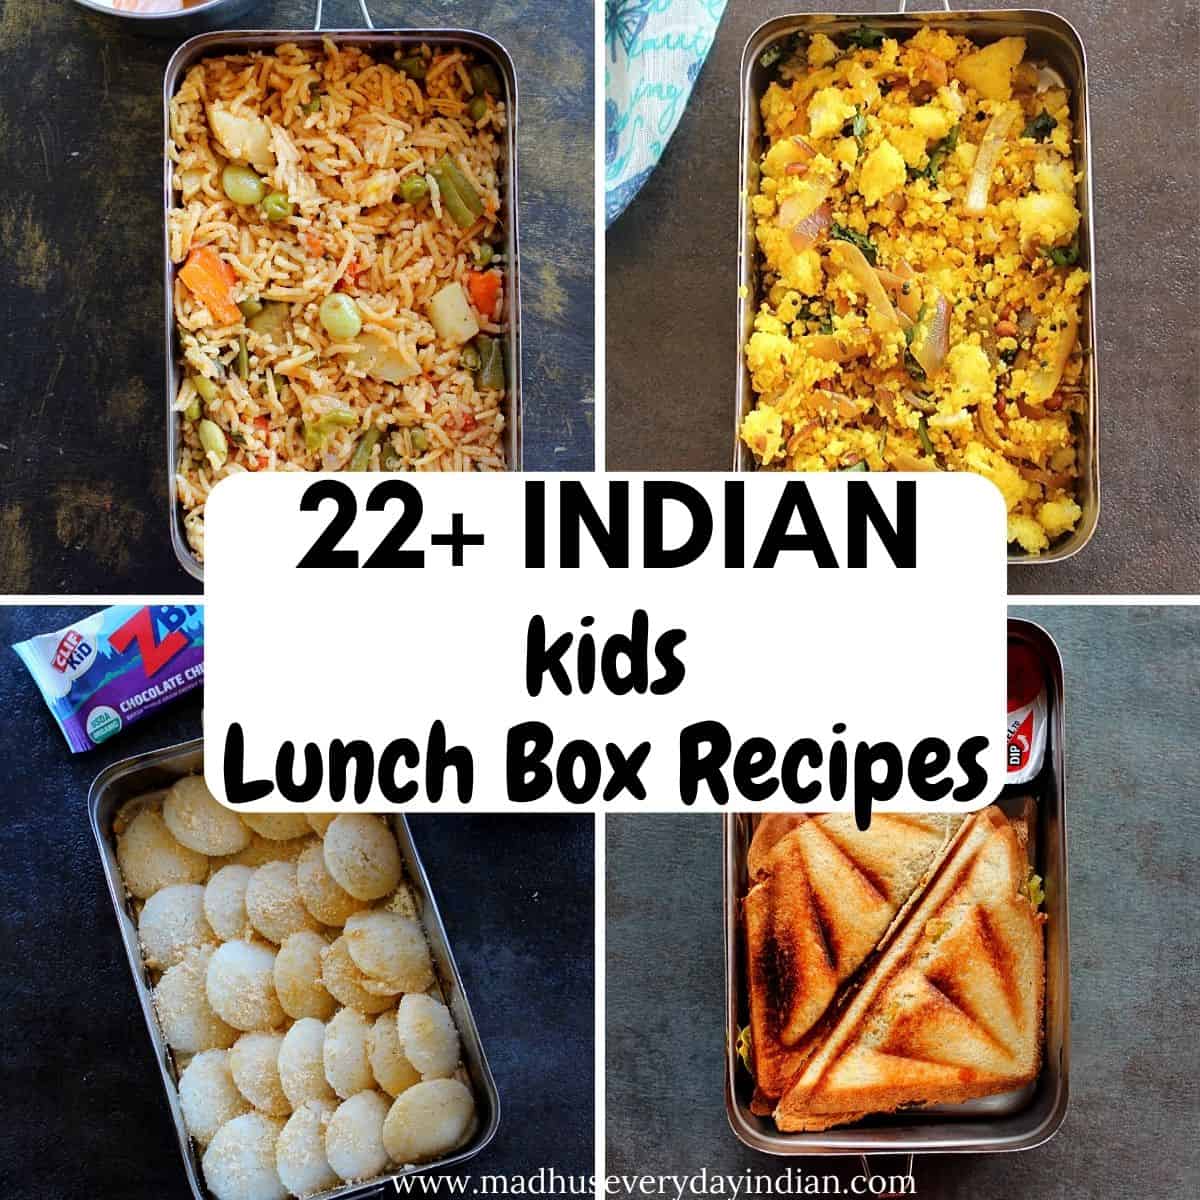 https://www.madhuseverydayindian.com/wp-content/uploads/2021/04/healthy-indian-kids-lunch-box-recipes-.jpg